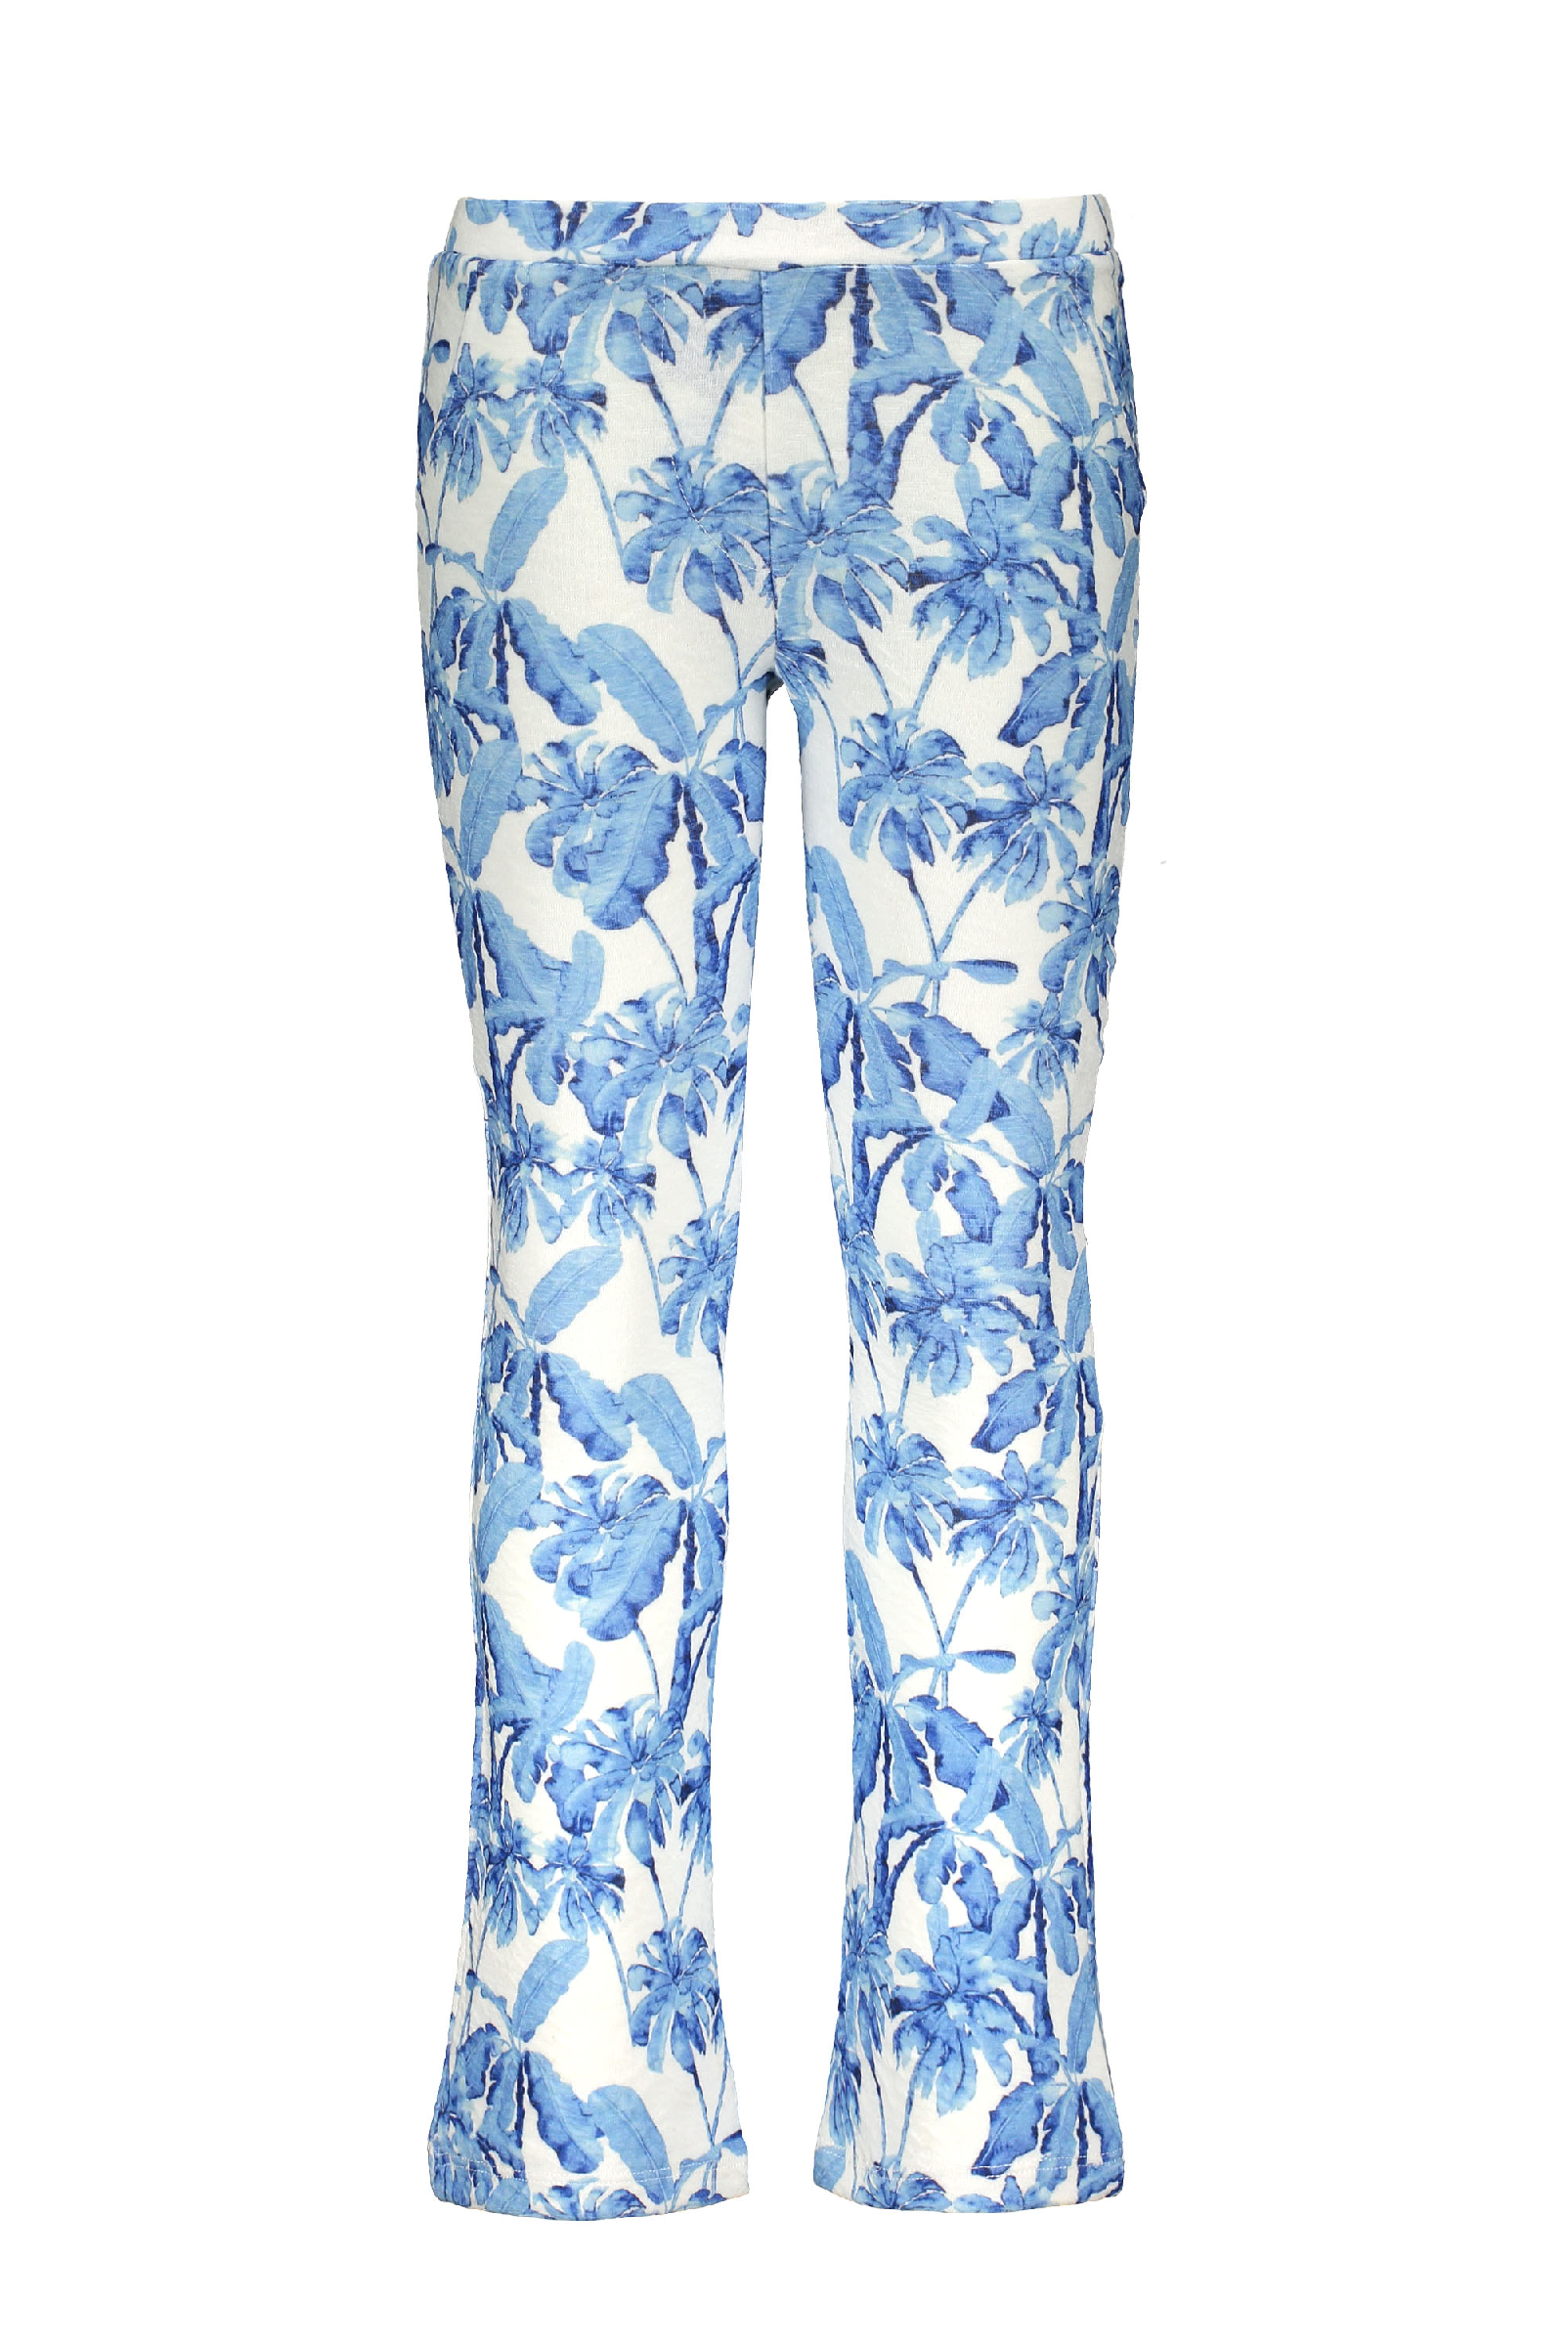 Meisjes Flo girls crepe AO palmtree flared pants van Flo in de kleur Blue palm in maat 152.